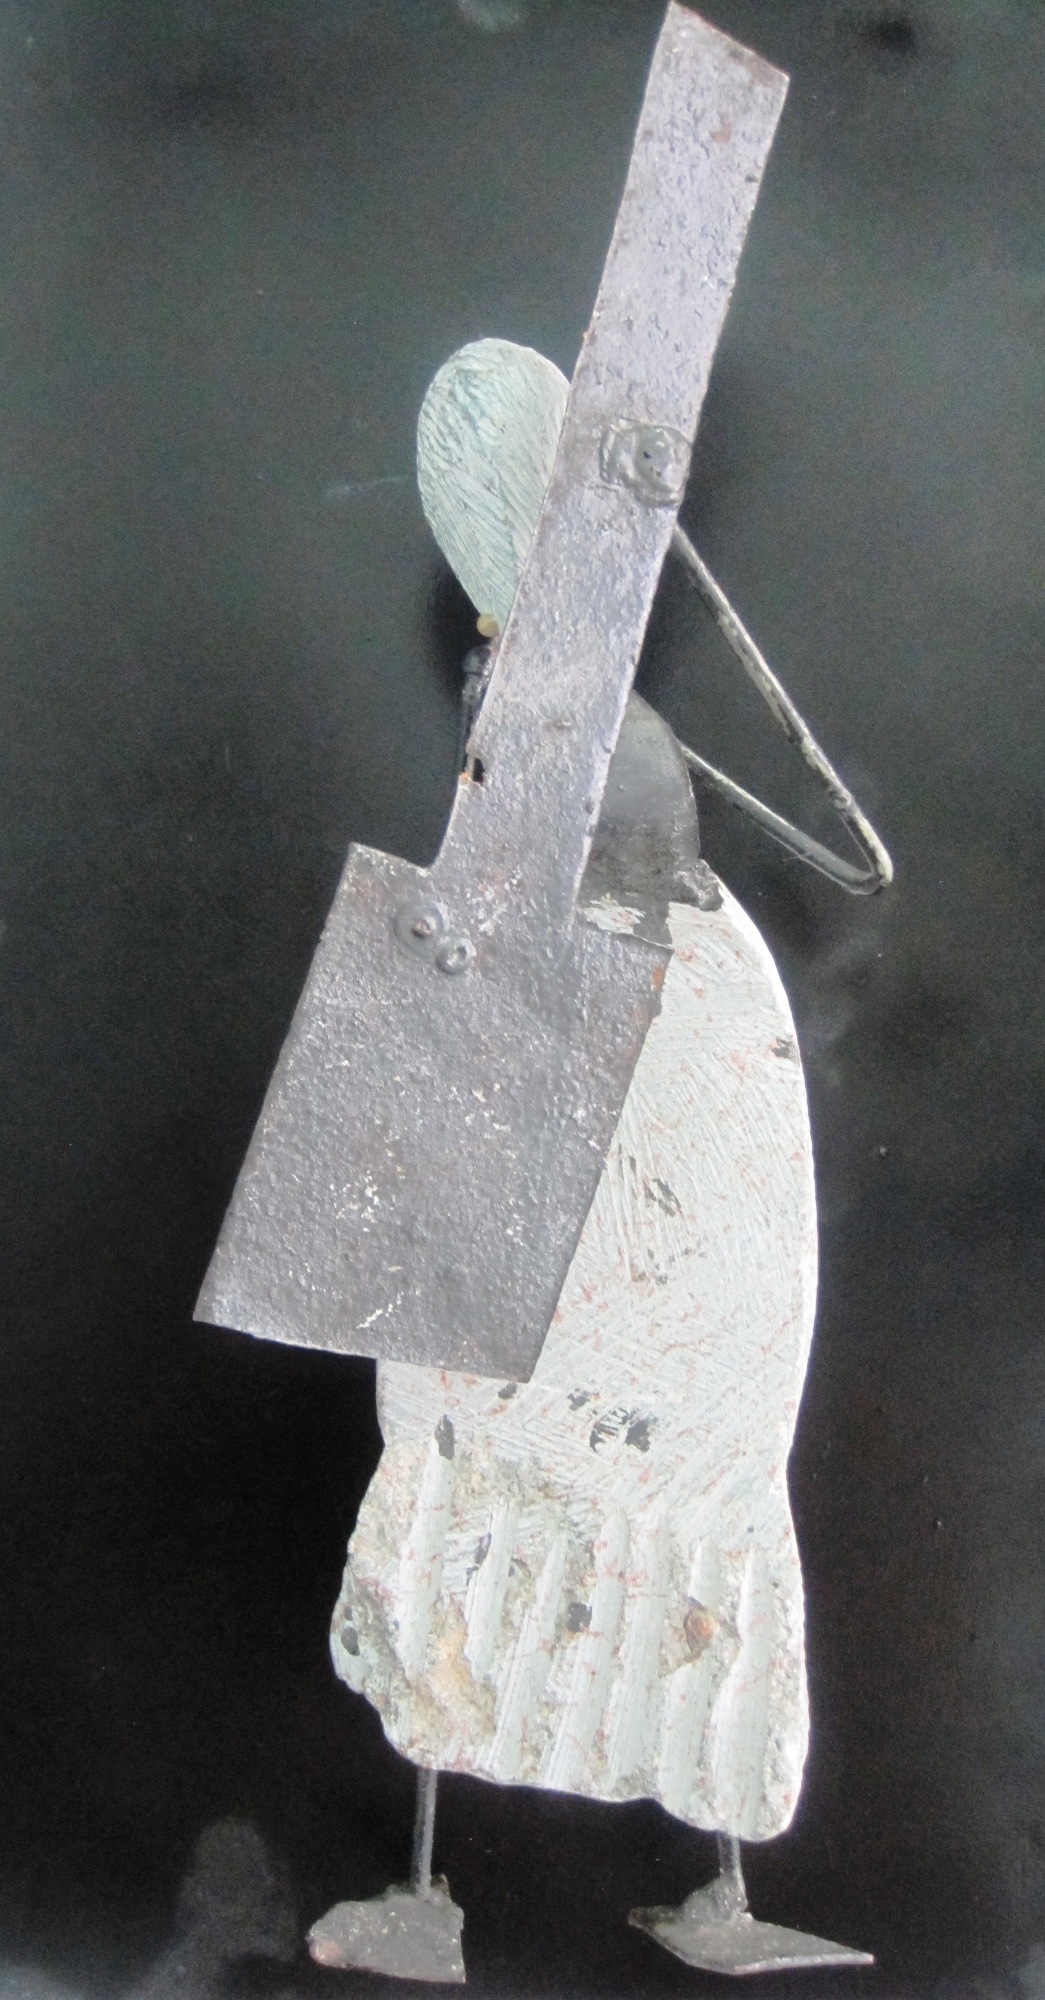 Abstract Sapolite Stone & Metal Figurine #002